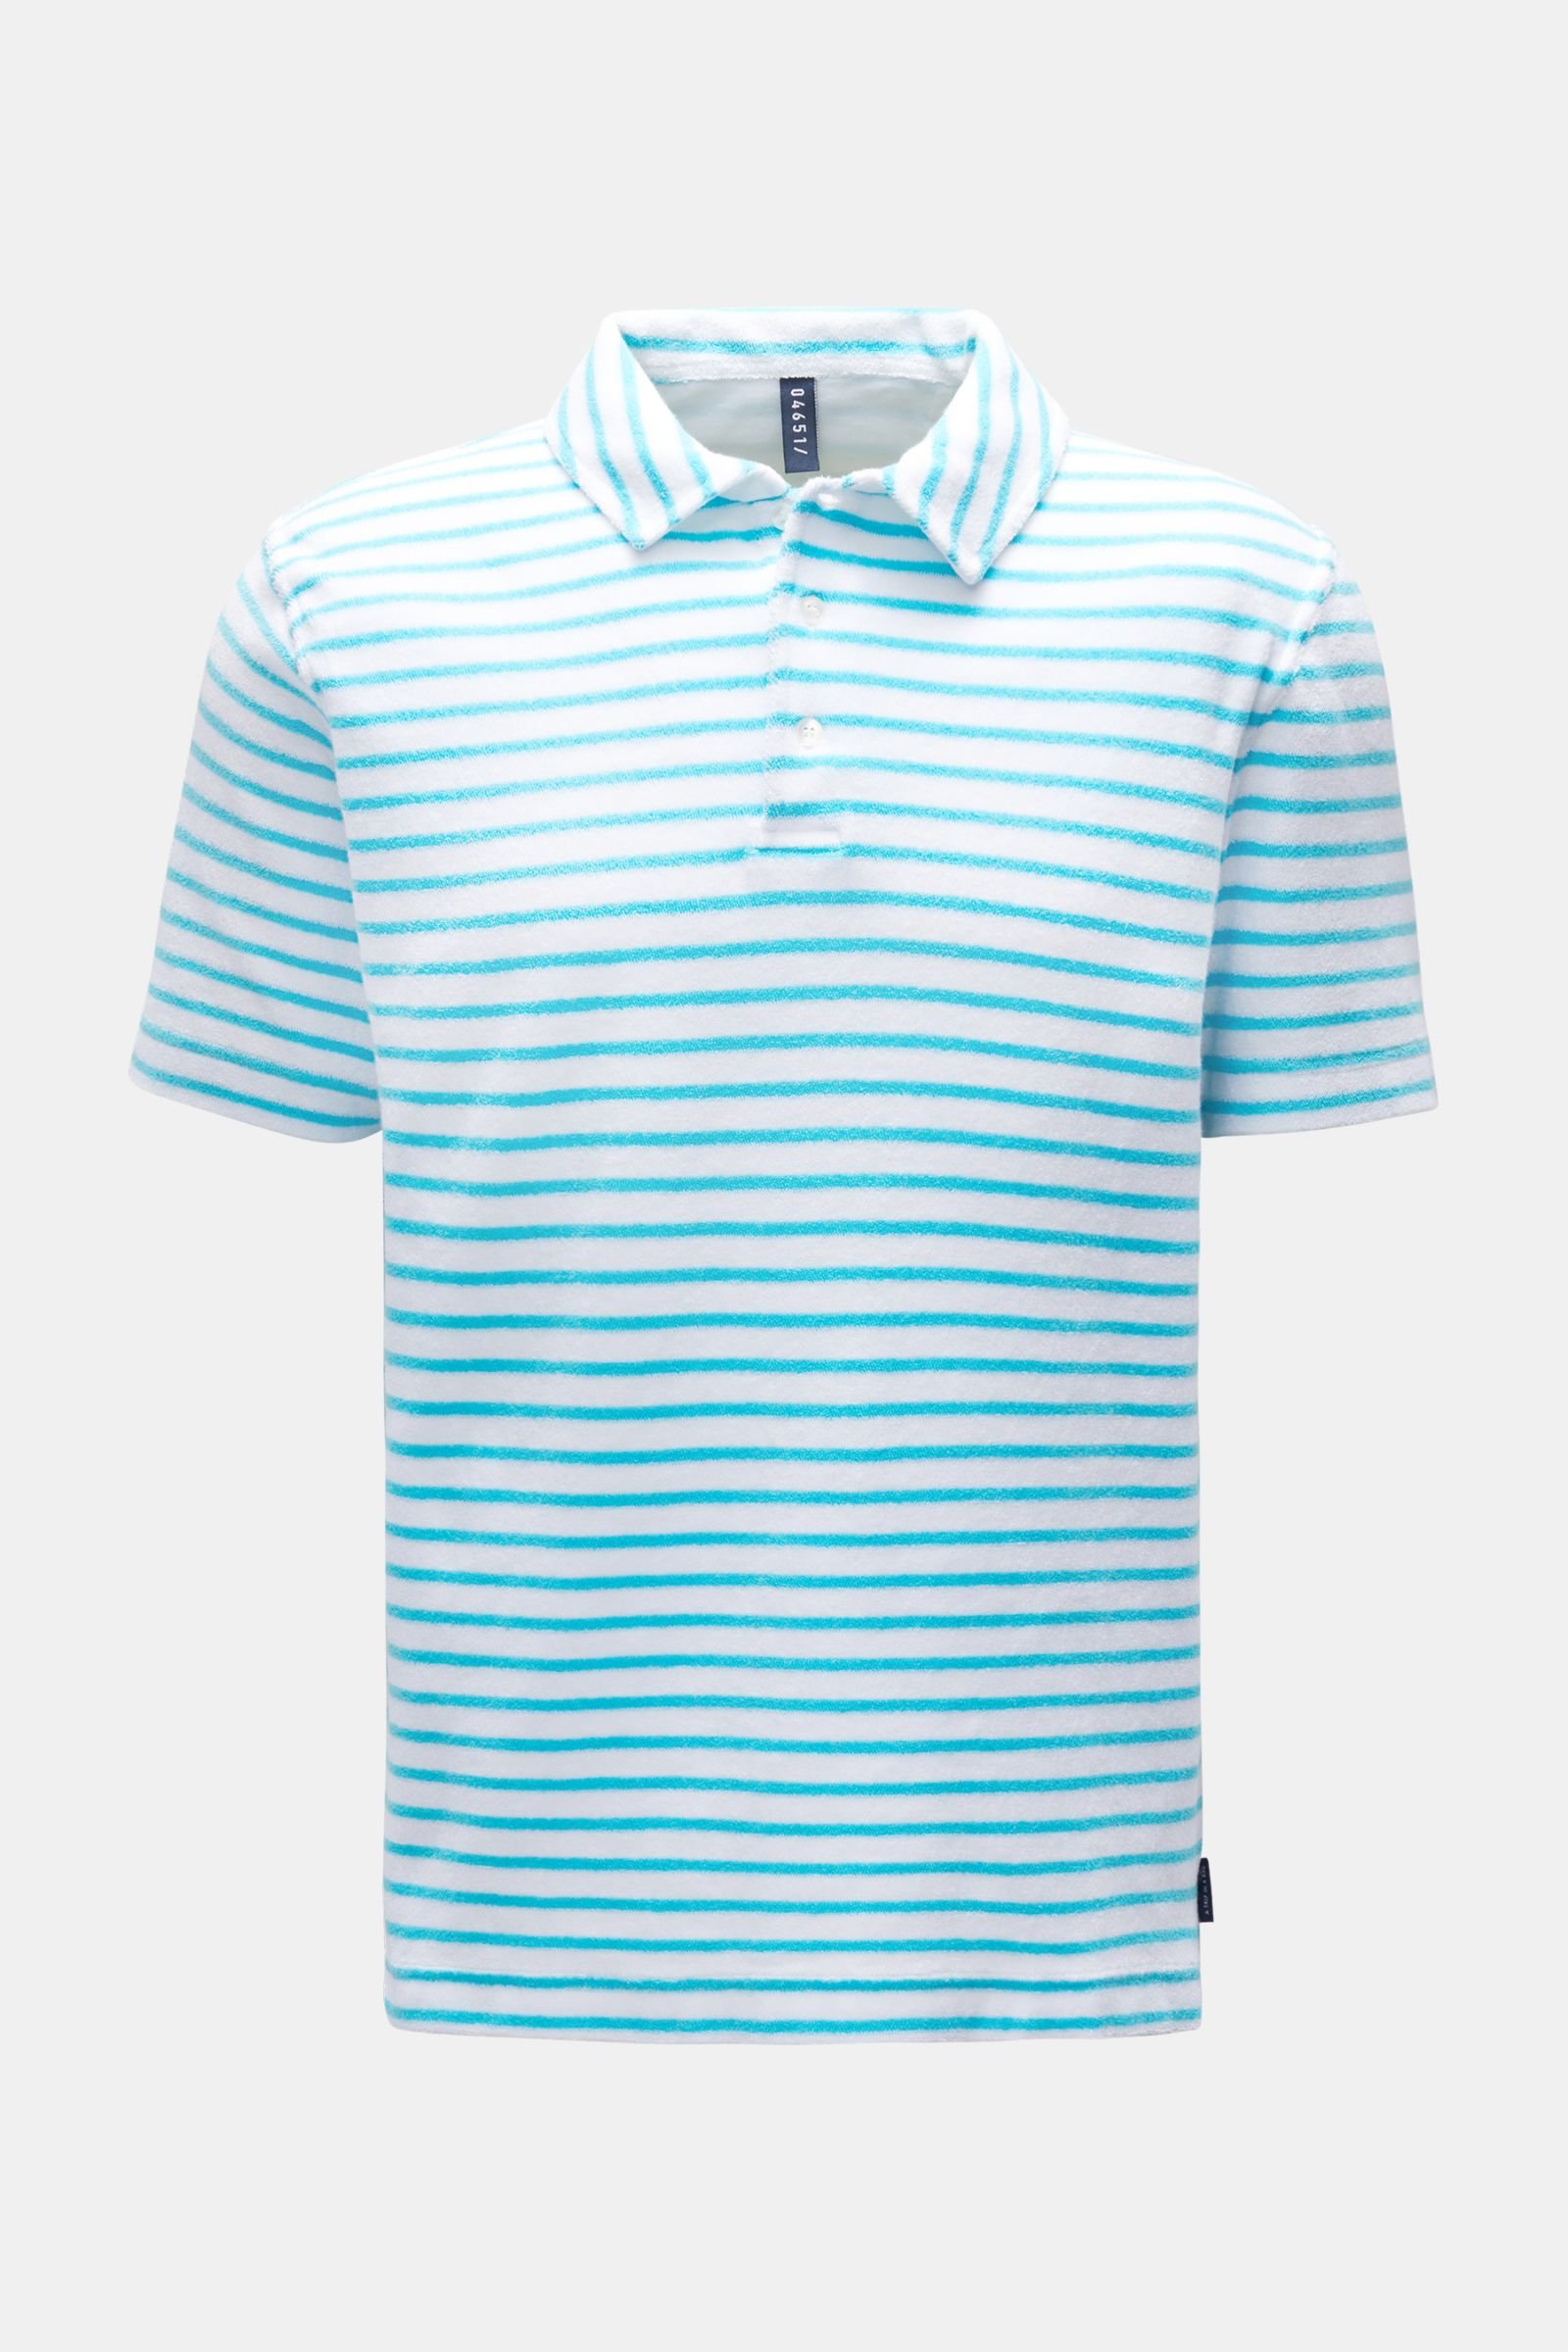 Frottee-Poloshirt 'Terry Stripe Polo' türkis/weiß gestreift